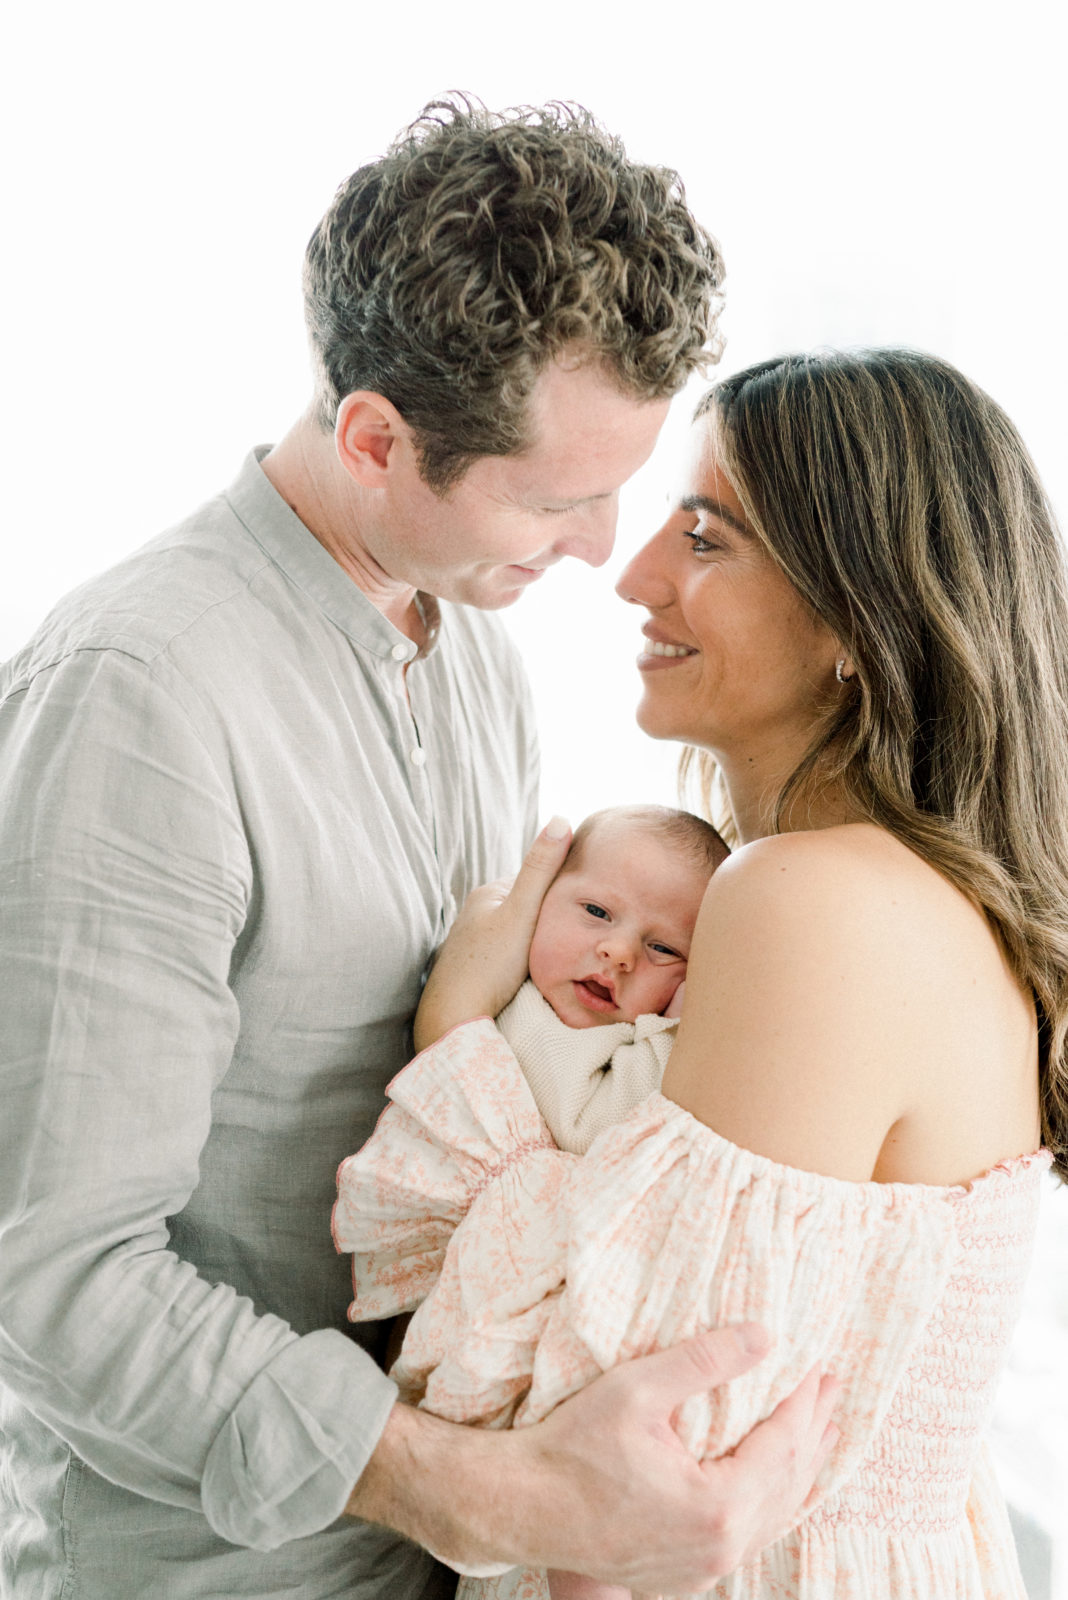 New family portrait with newborn 